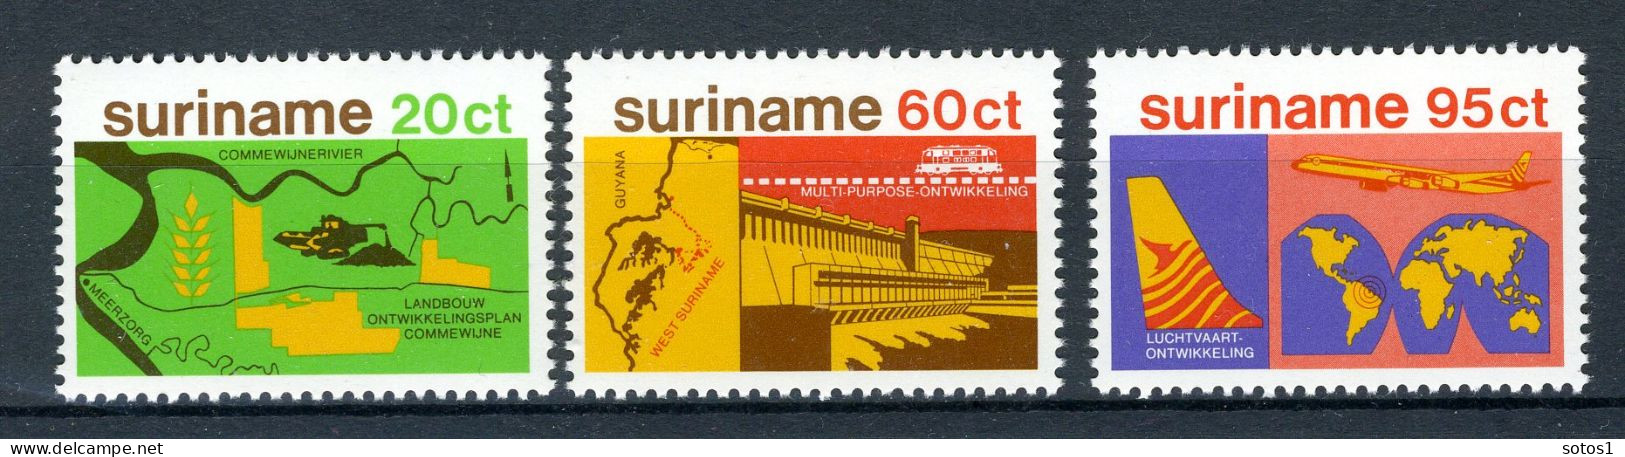 SURINAME 835/837 MNH 1978 - Stimulering Economische Ontwikkeling. - Surinam